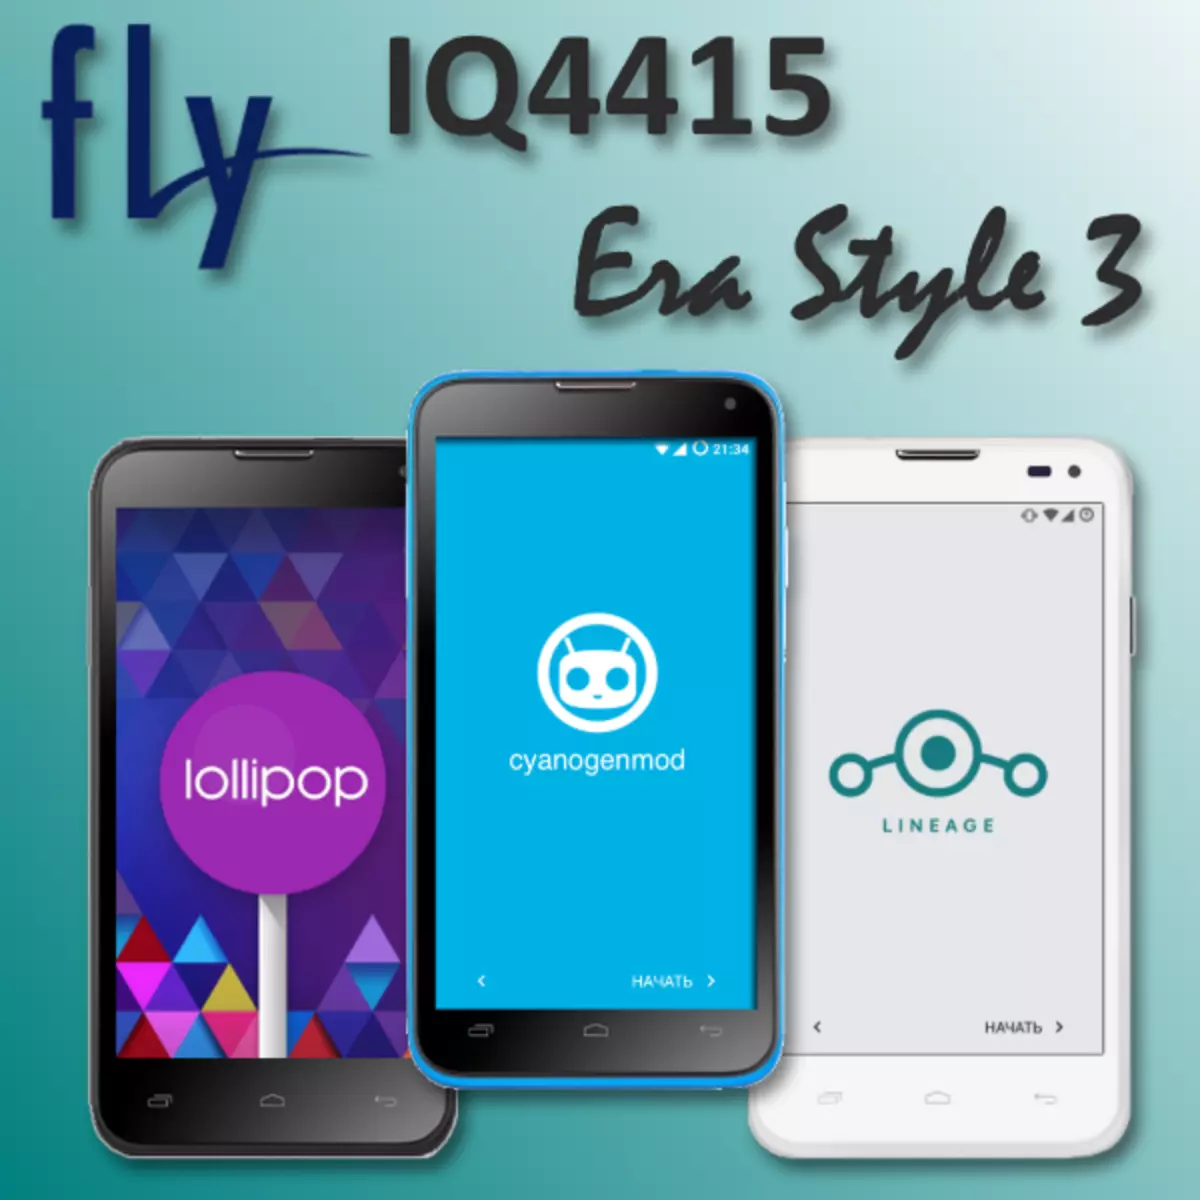 Fly IQ4415 ERA Style 3 Firmware